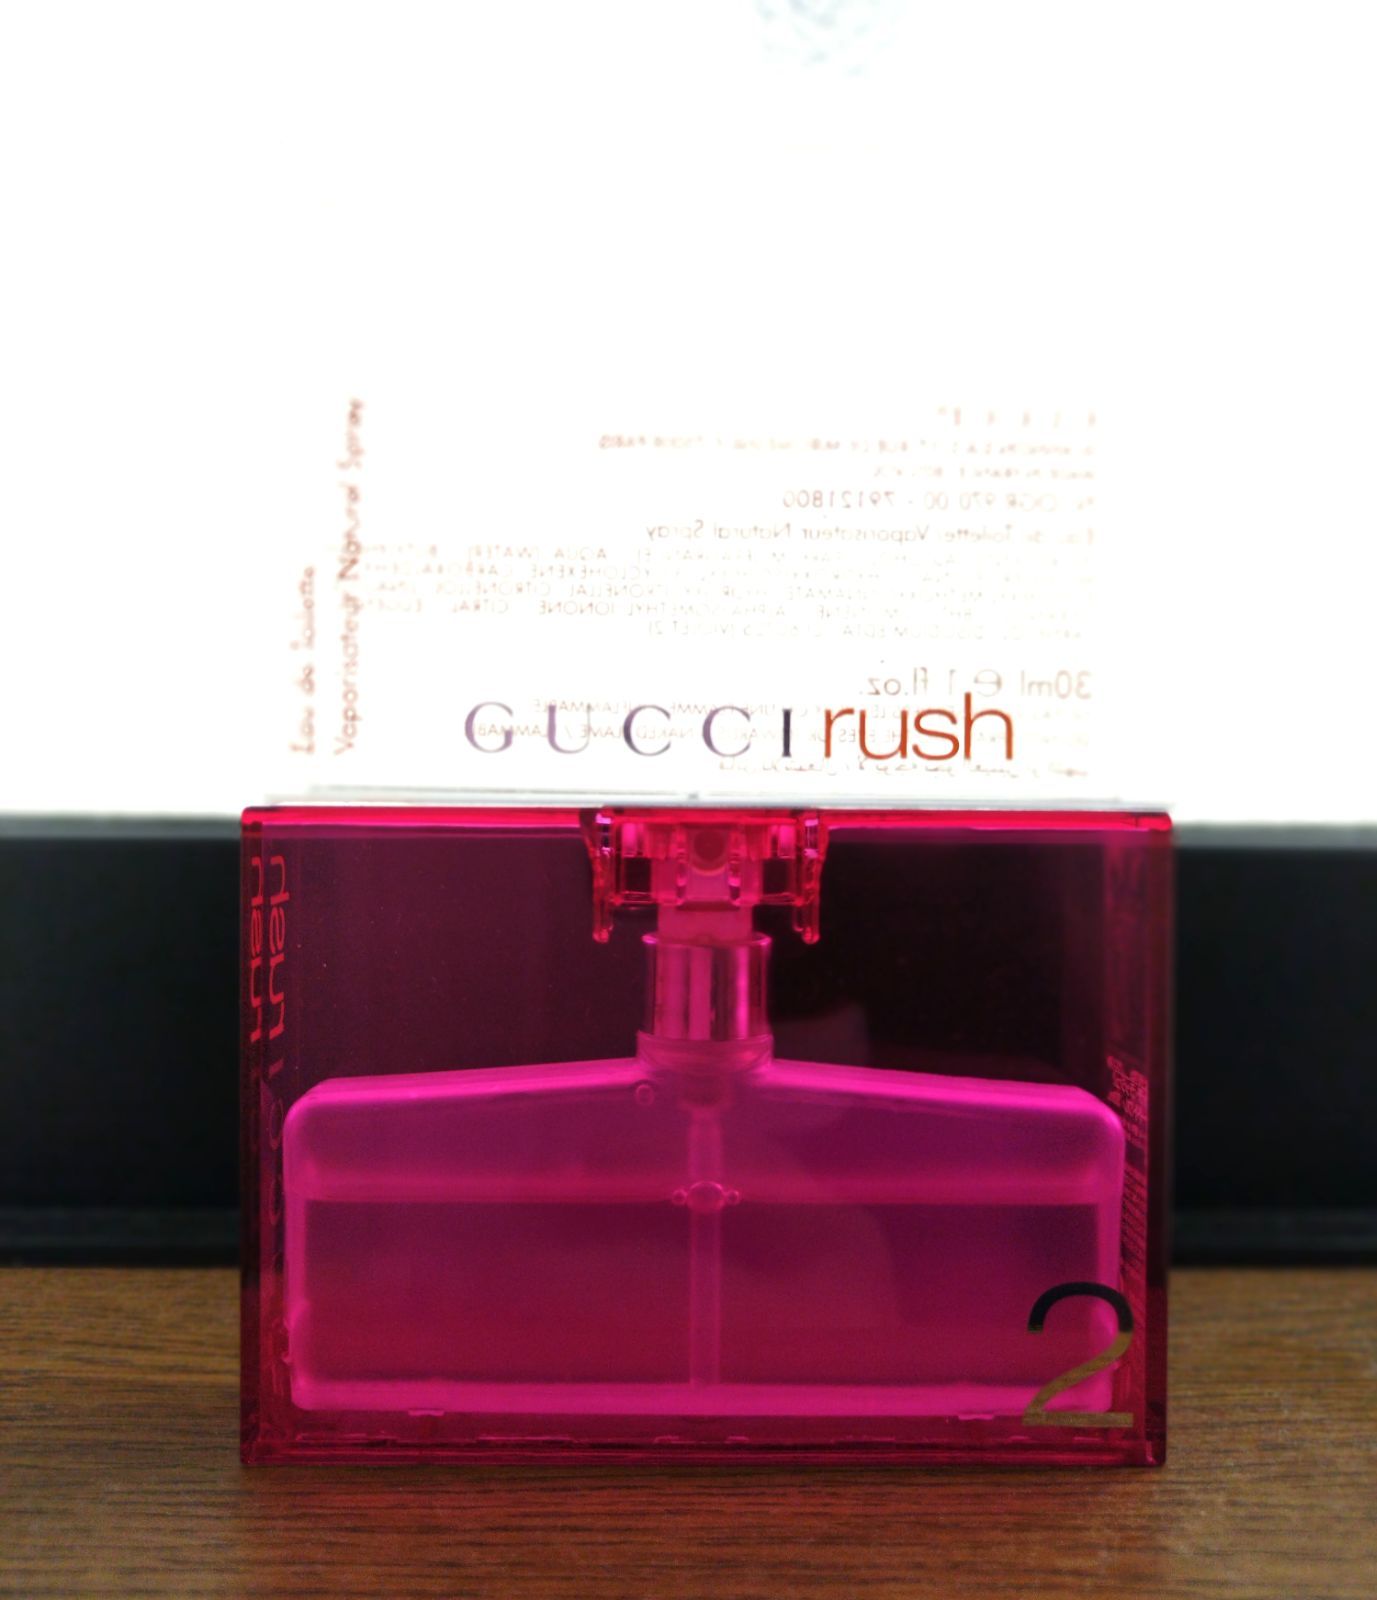 GUCCI rush2 グッチ ラッシュ2 オードトワレ EDT 香水 30ml - 香水